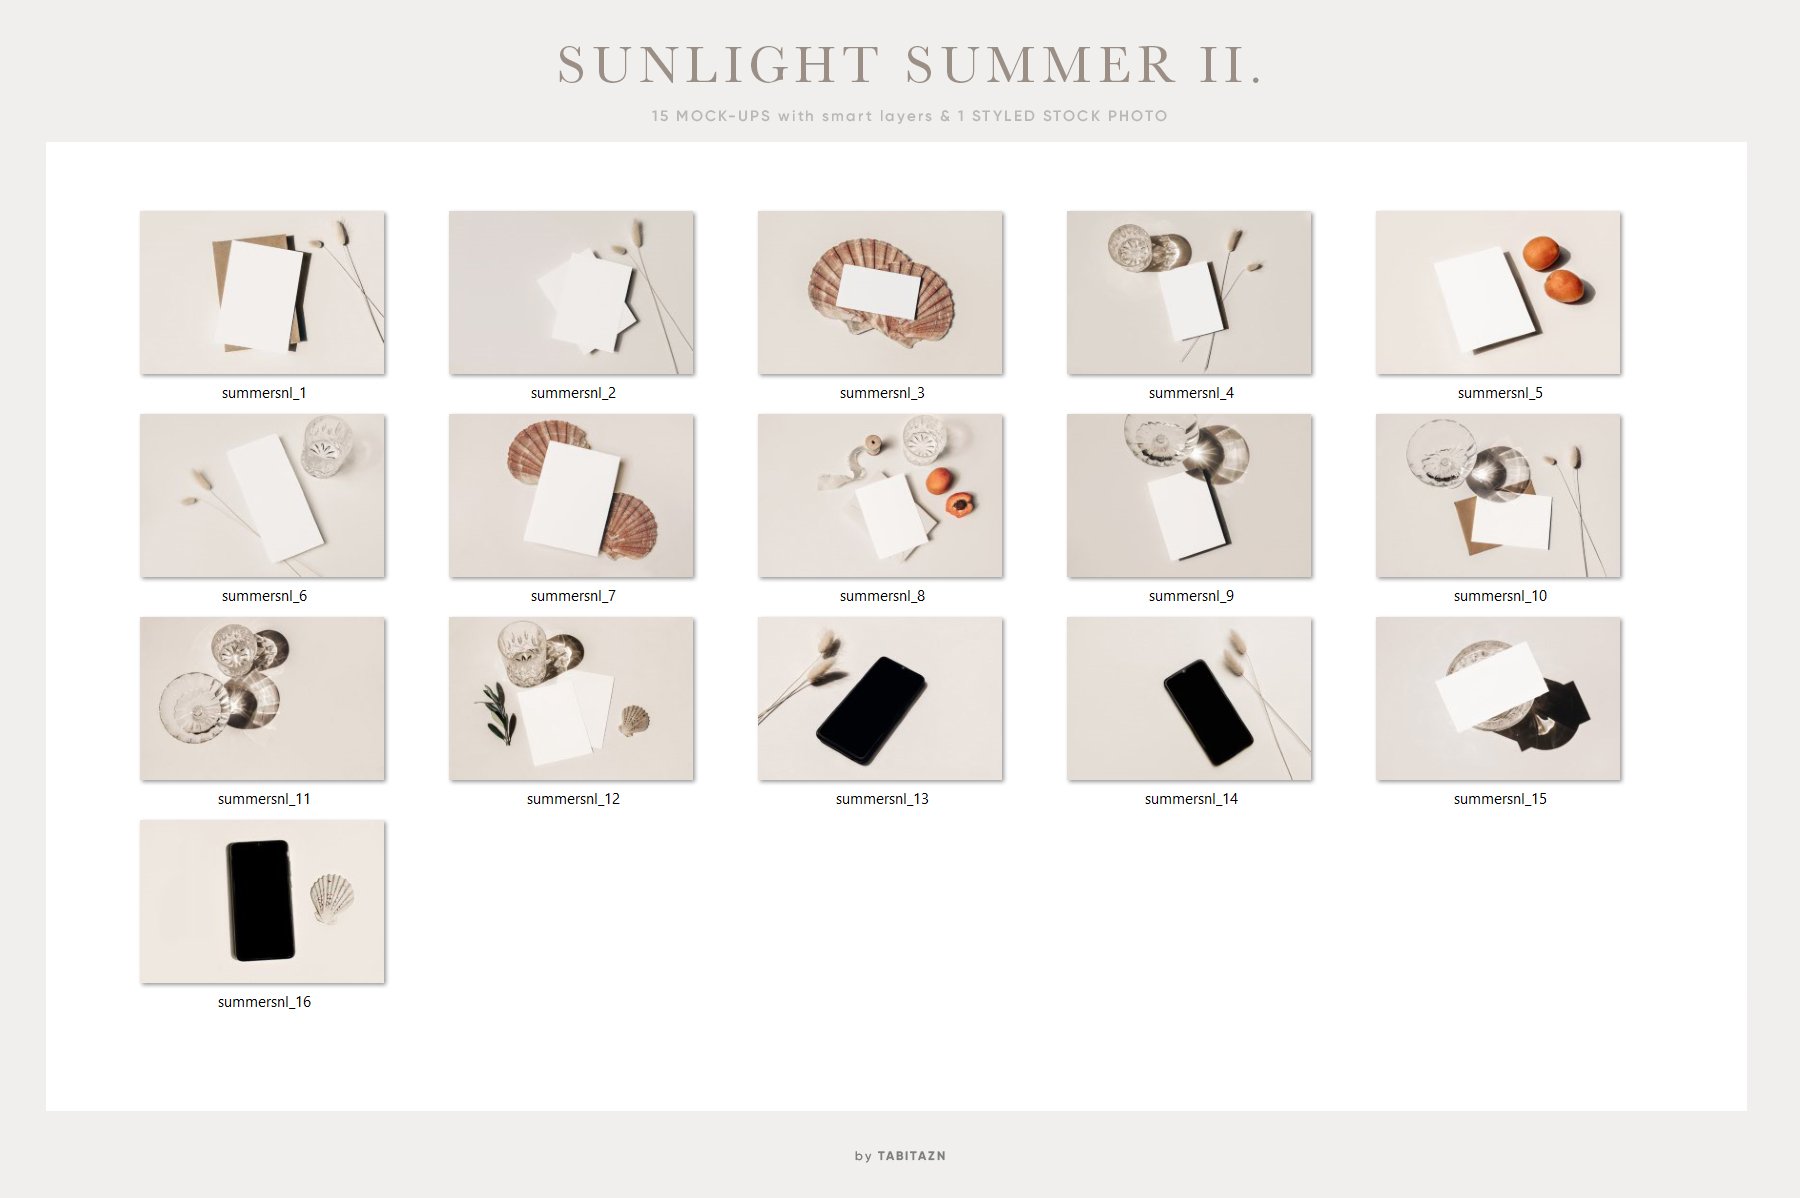 Summer Sunlight Stationery Mockups & Photos II